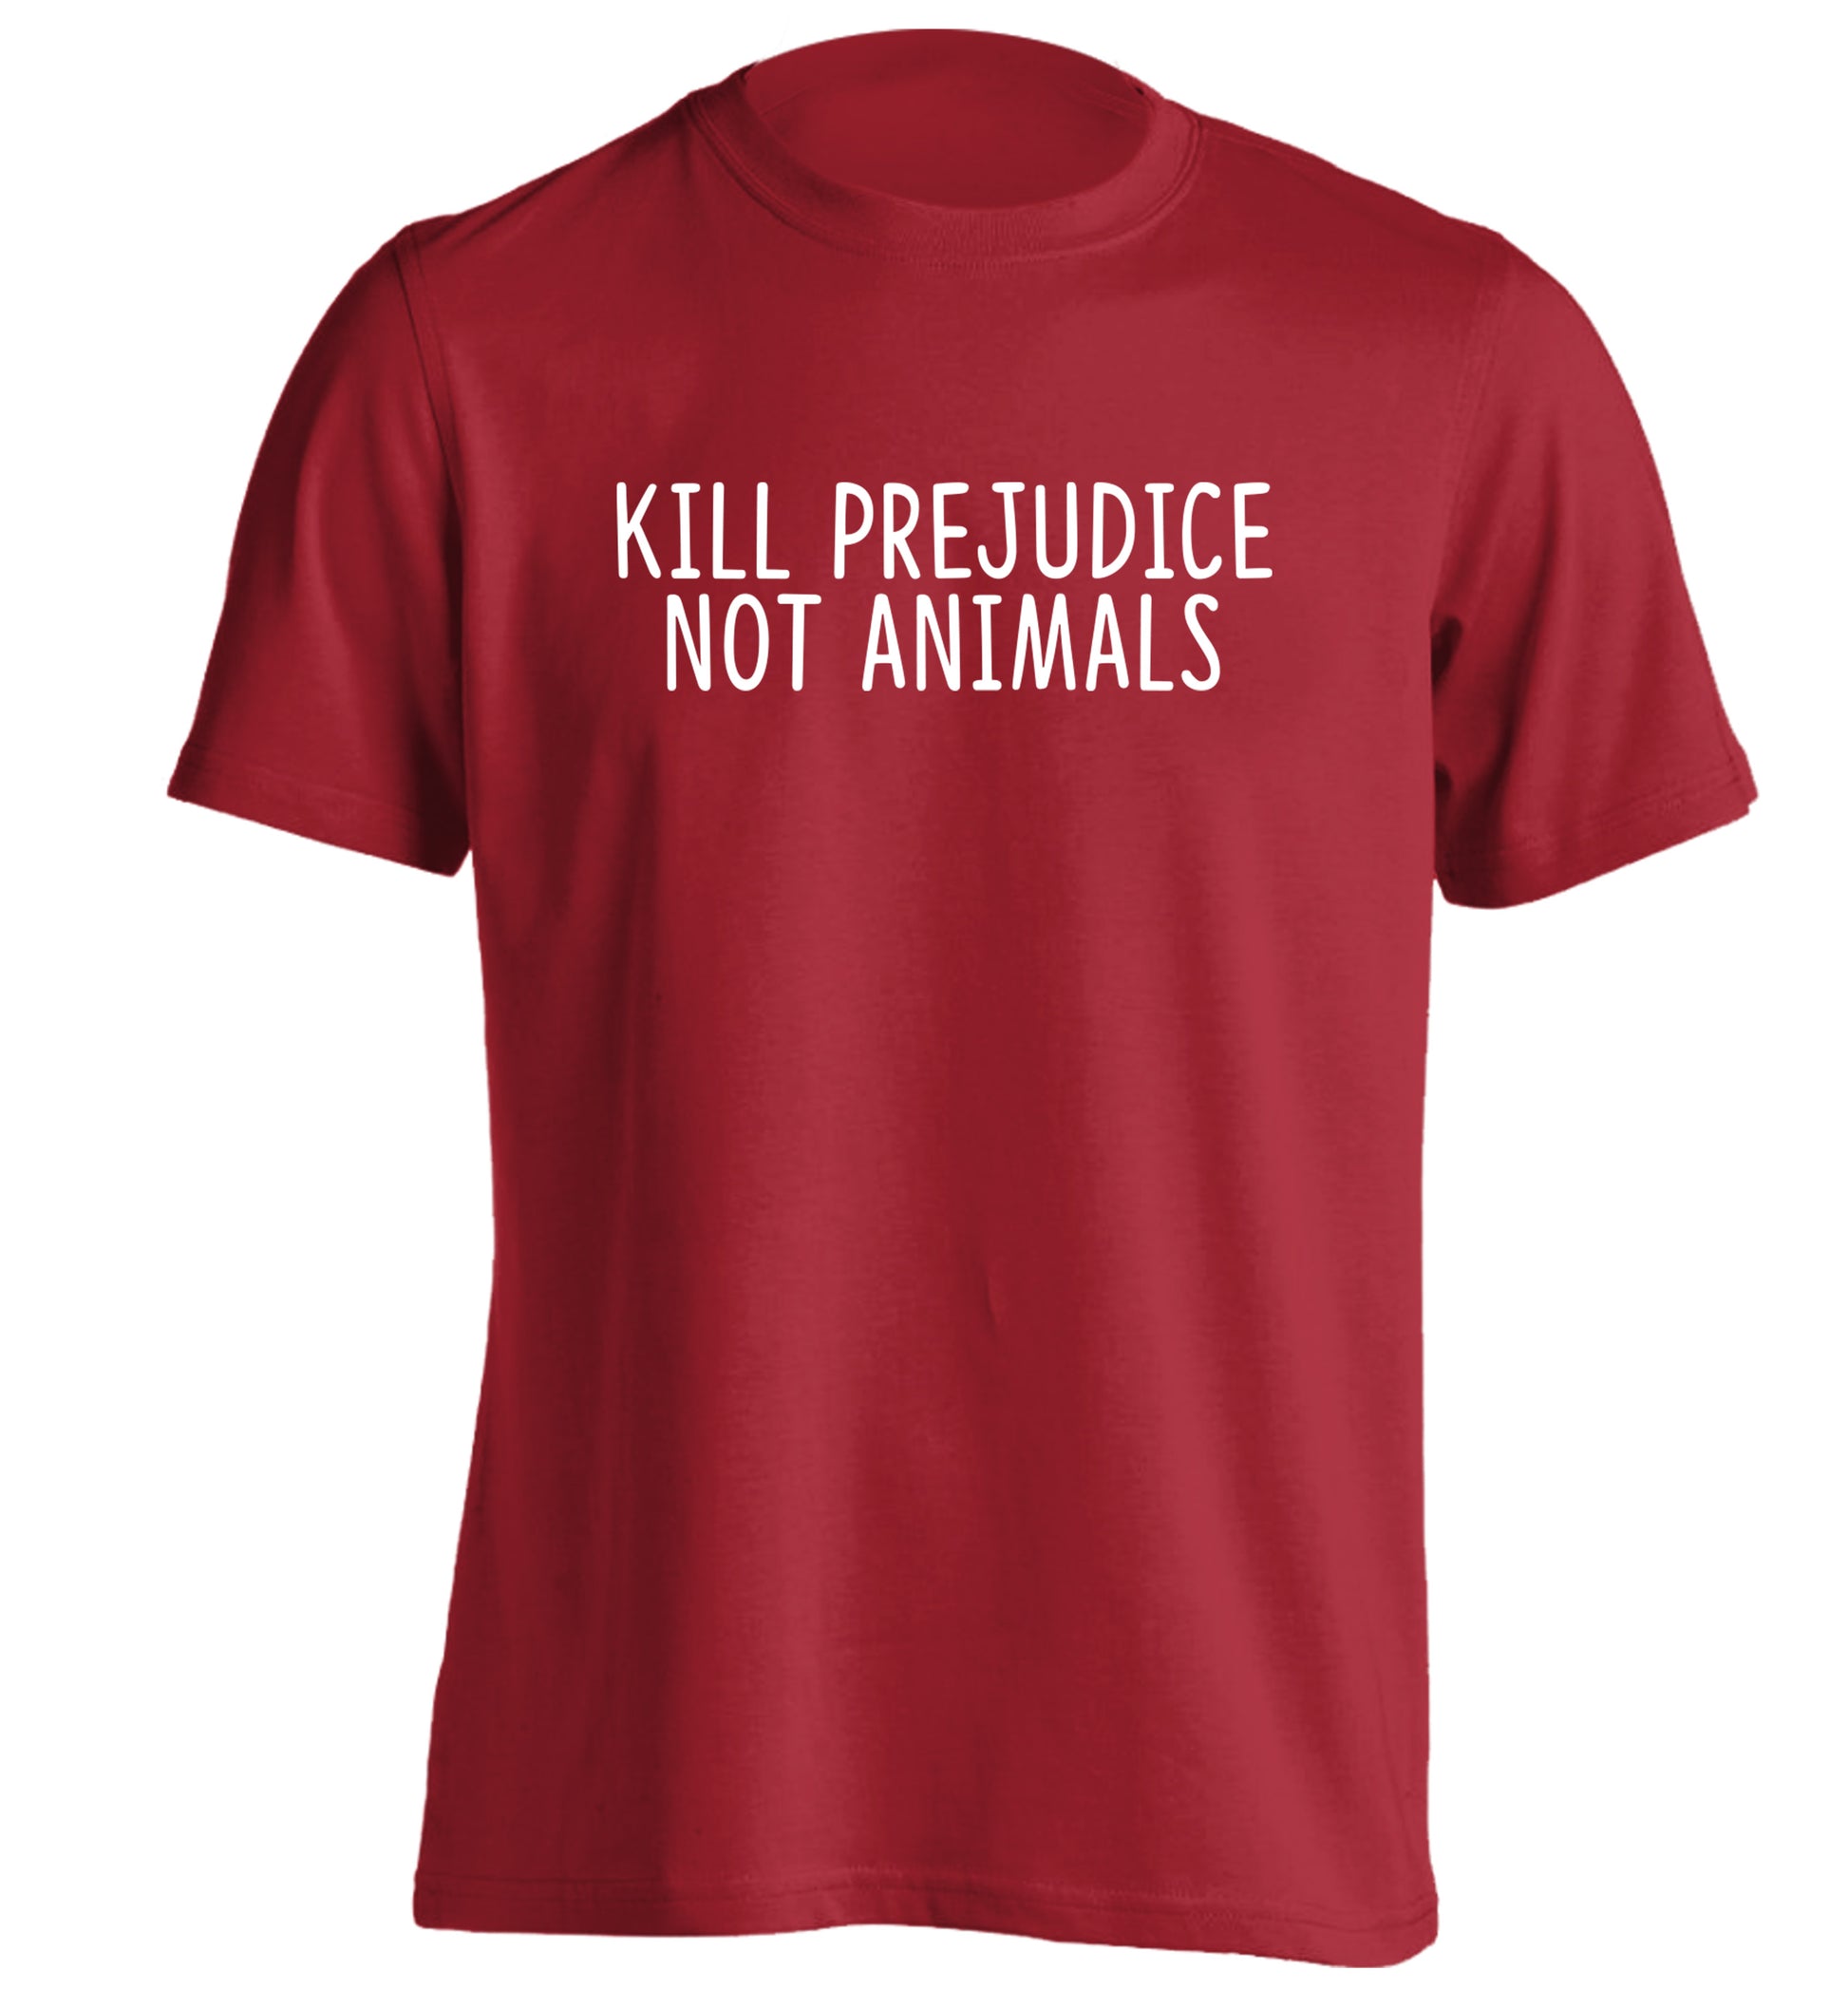 Kill Prejudice Not Animals adults unisex red Tshirt 2XL